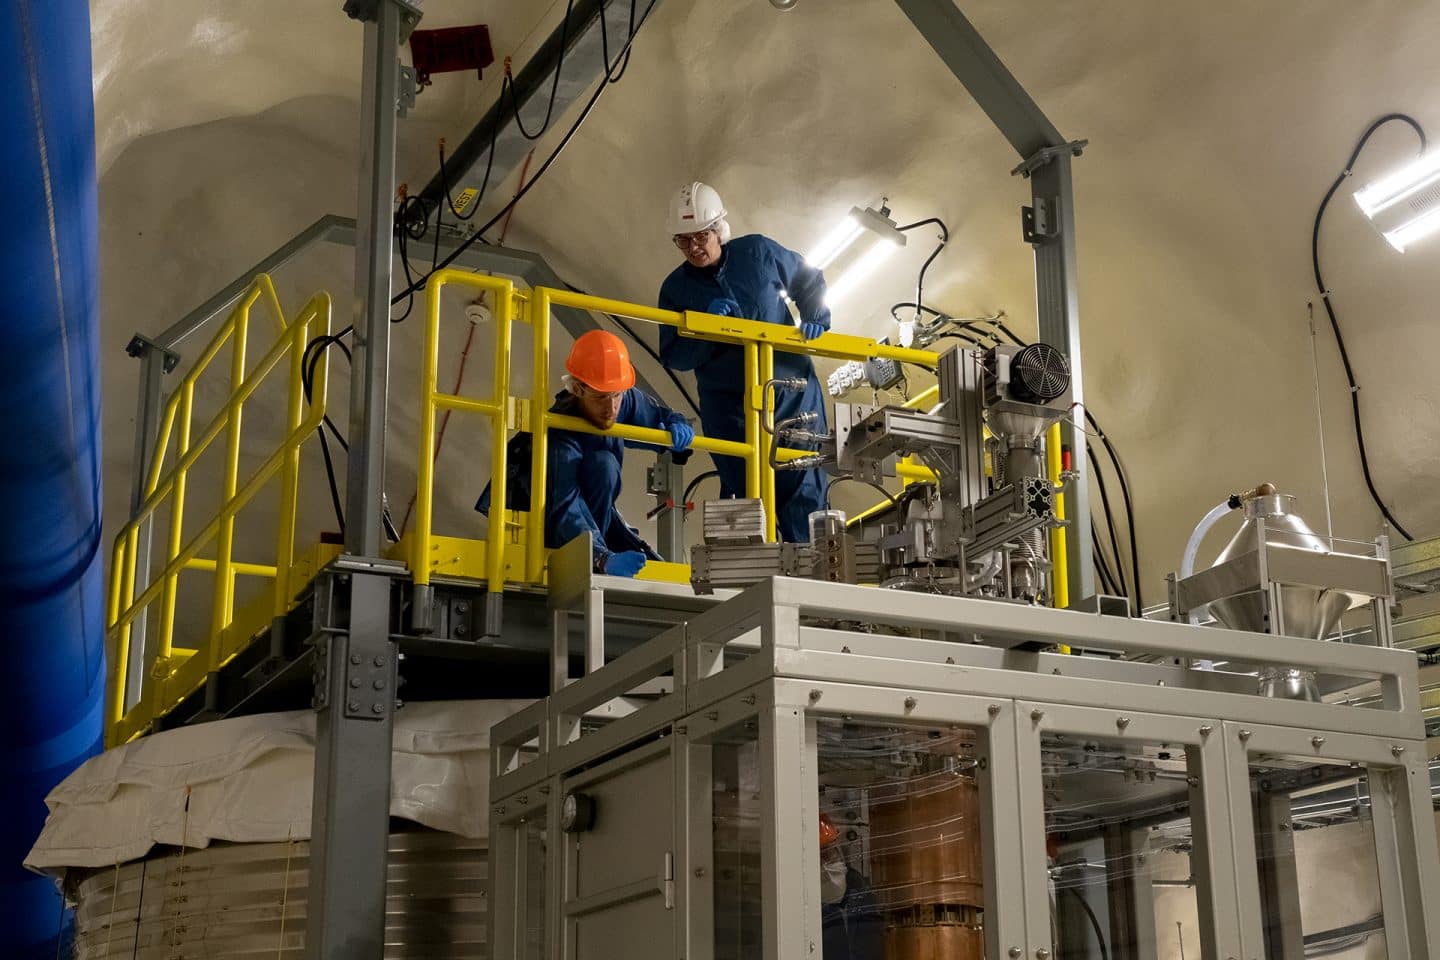 Artist Jol Thoms examines CUTE (a Cryogenic Underground Test Facility) at SNOLAB